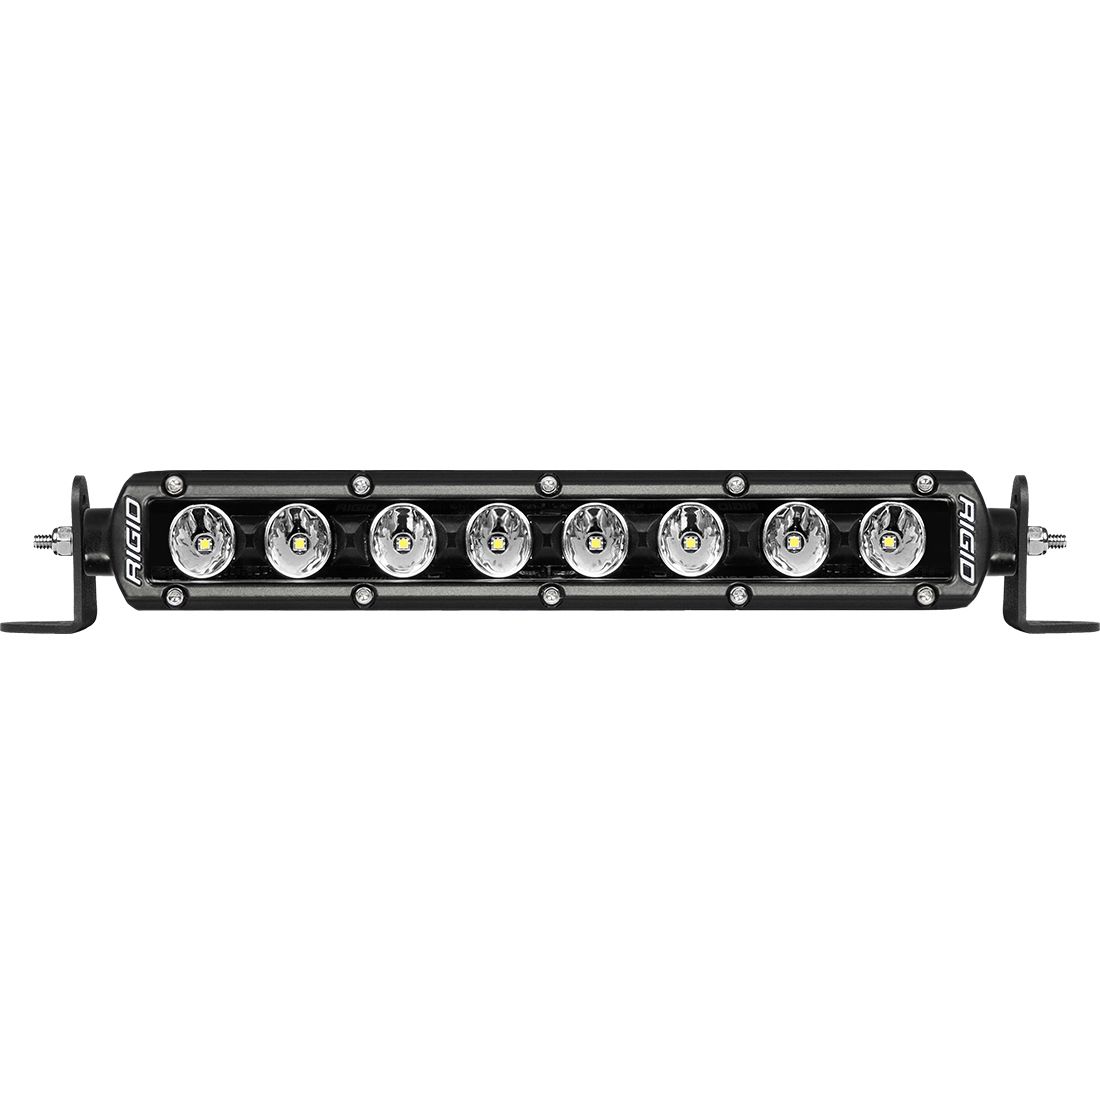 Rigid Industries Radiance Plus SR-Series LED Light 8 Option RGBW Backlight 10 Inch